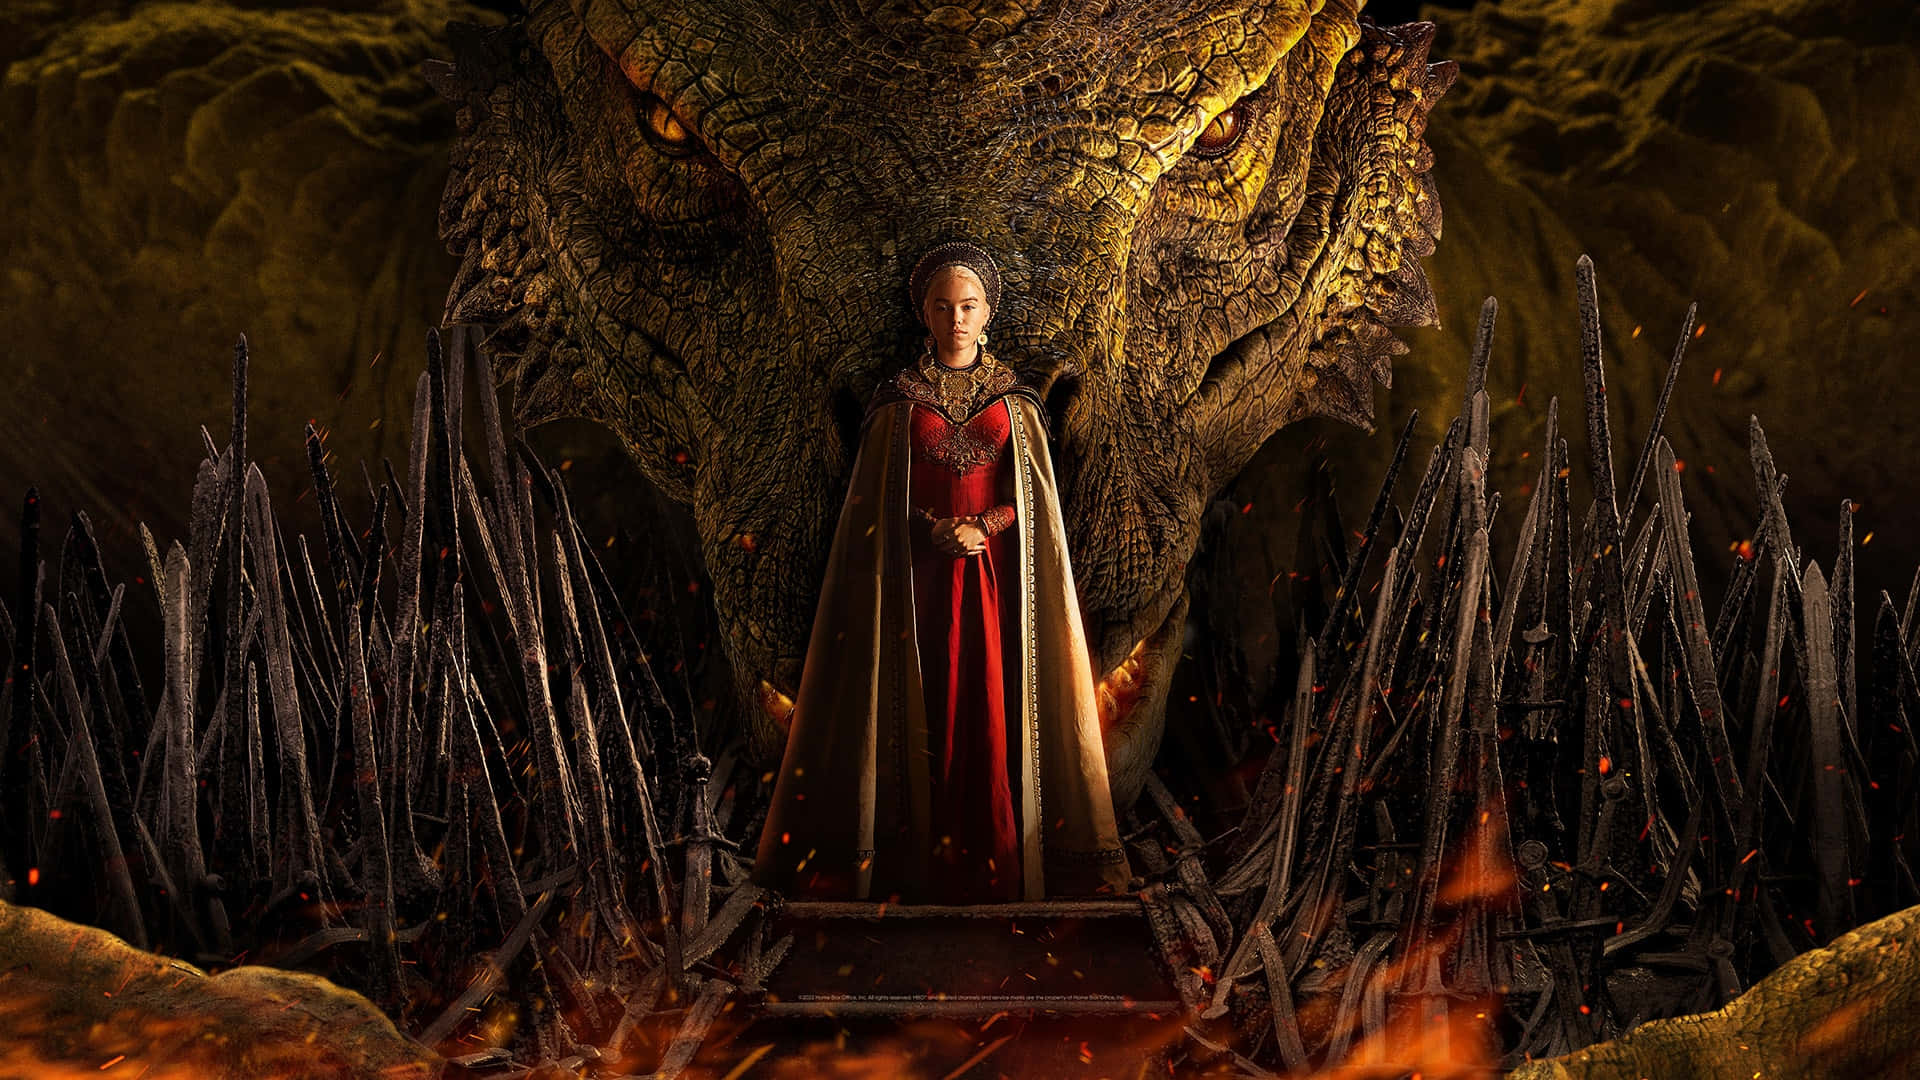 Fiery Triumph - A Dragon Unleashes Inferno